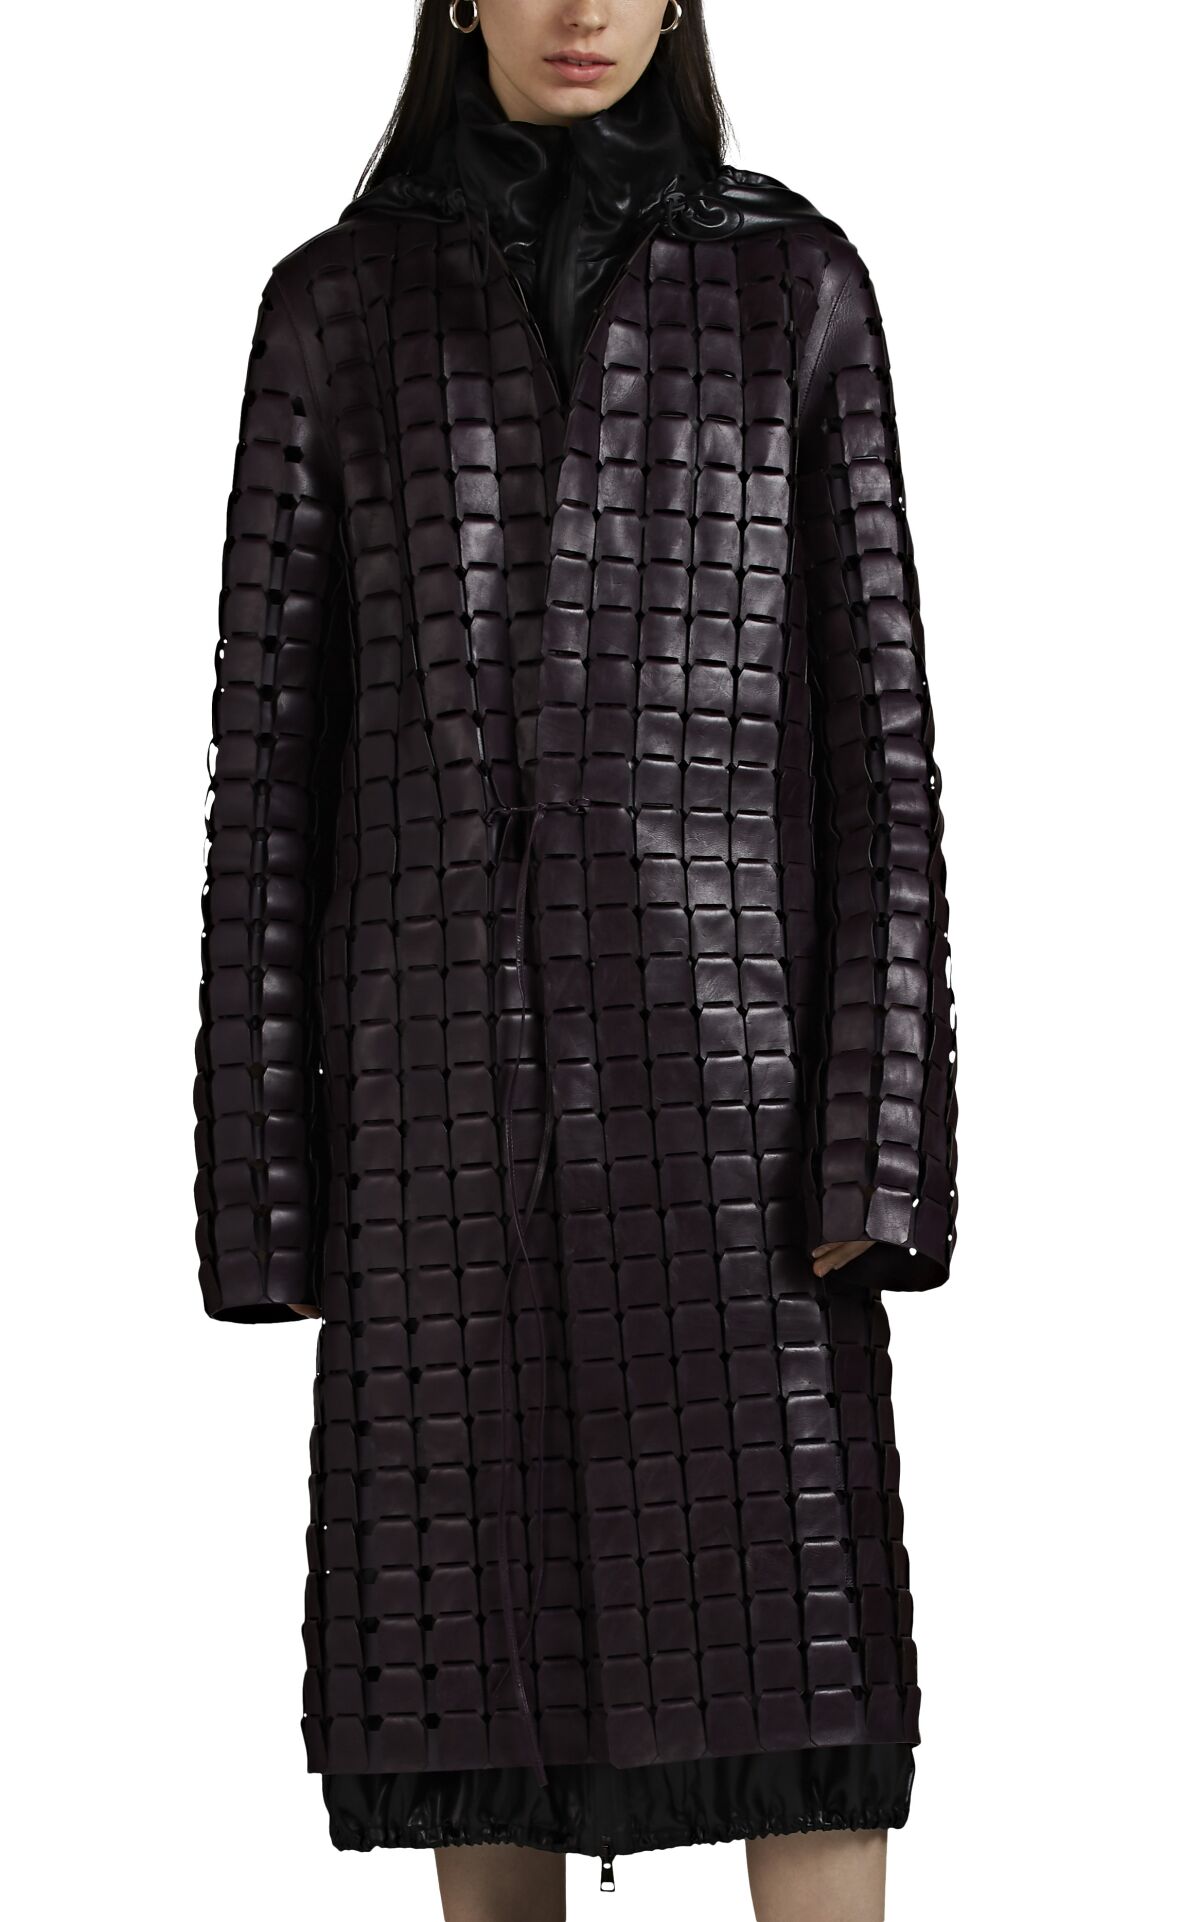 This Bottega Veneta laser-cut leather coat is an exclusive to Barneys this season.